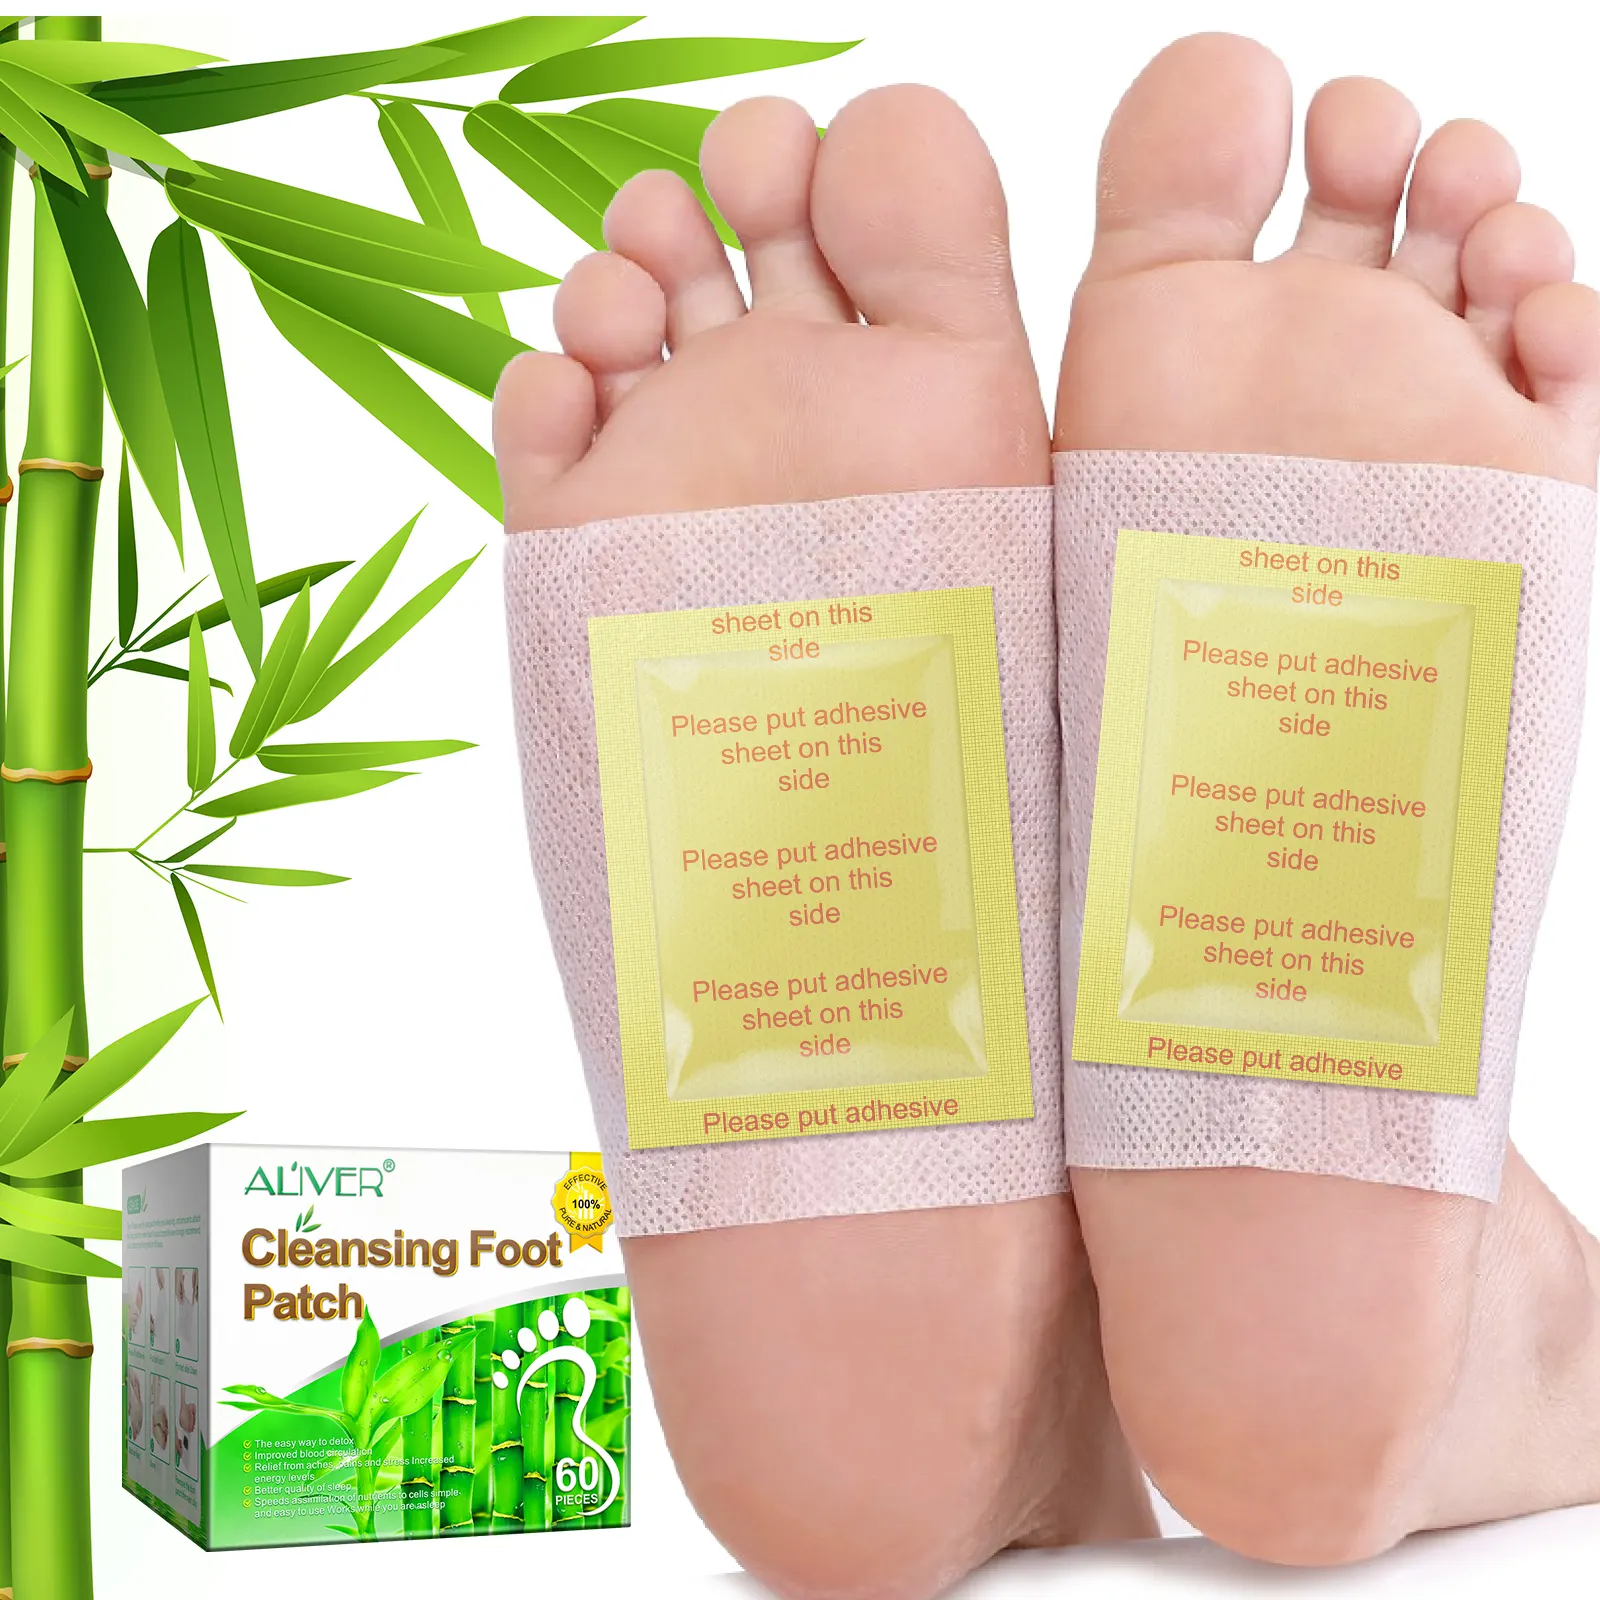 ALIVER detox फुट पैच 100% प्राकृतिक हर्बल तत्व शरीर को आराम गहरी नींद पैर detox के पैच स्वास्थ्य देखभाल, detoxifying पैर पैच